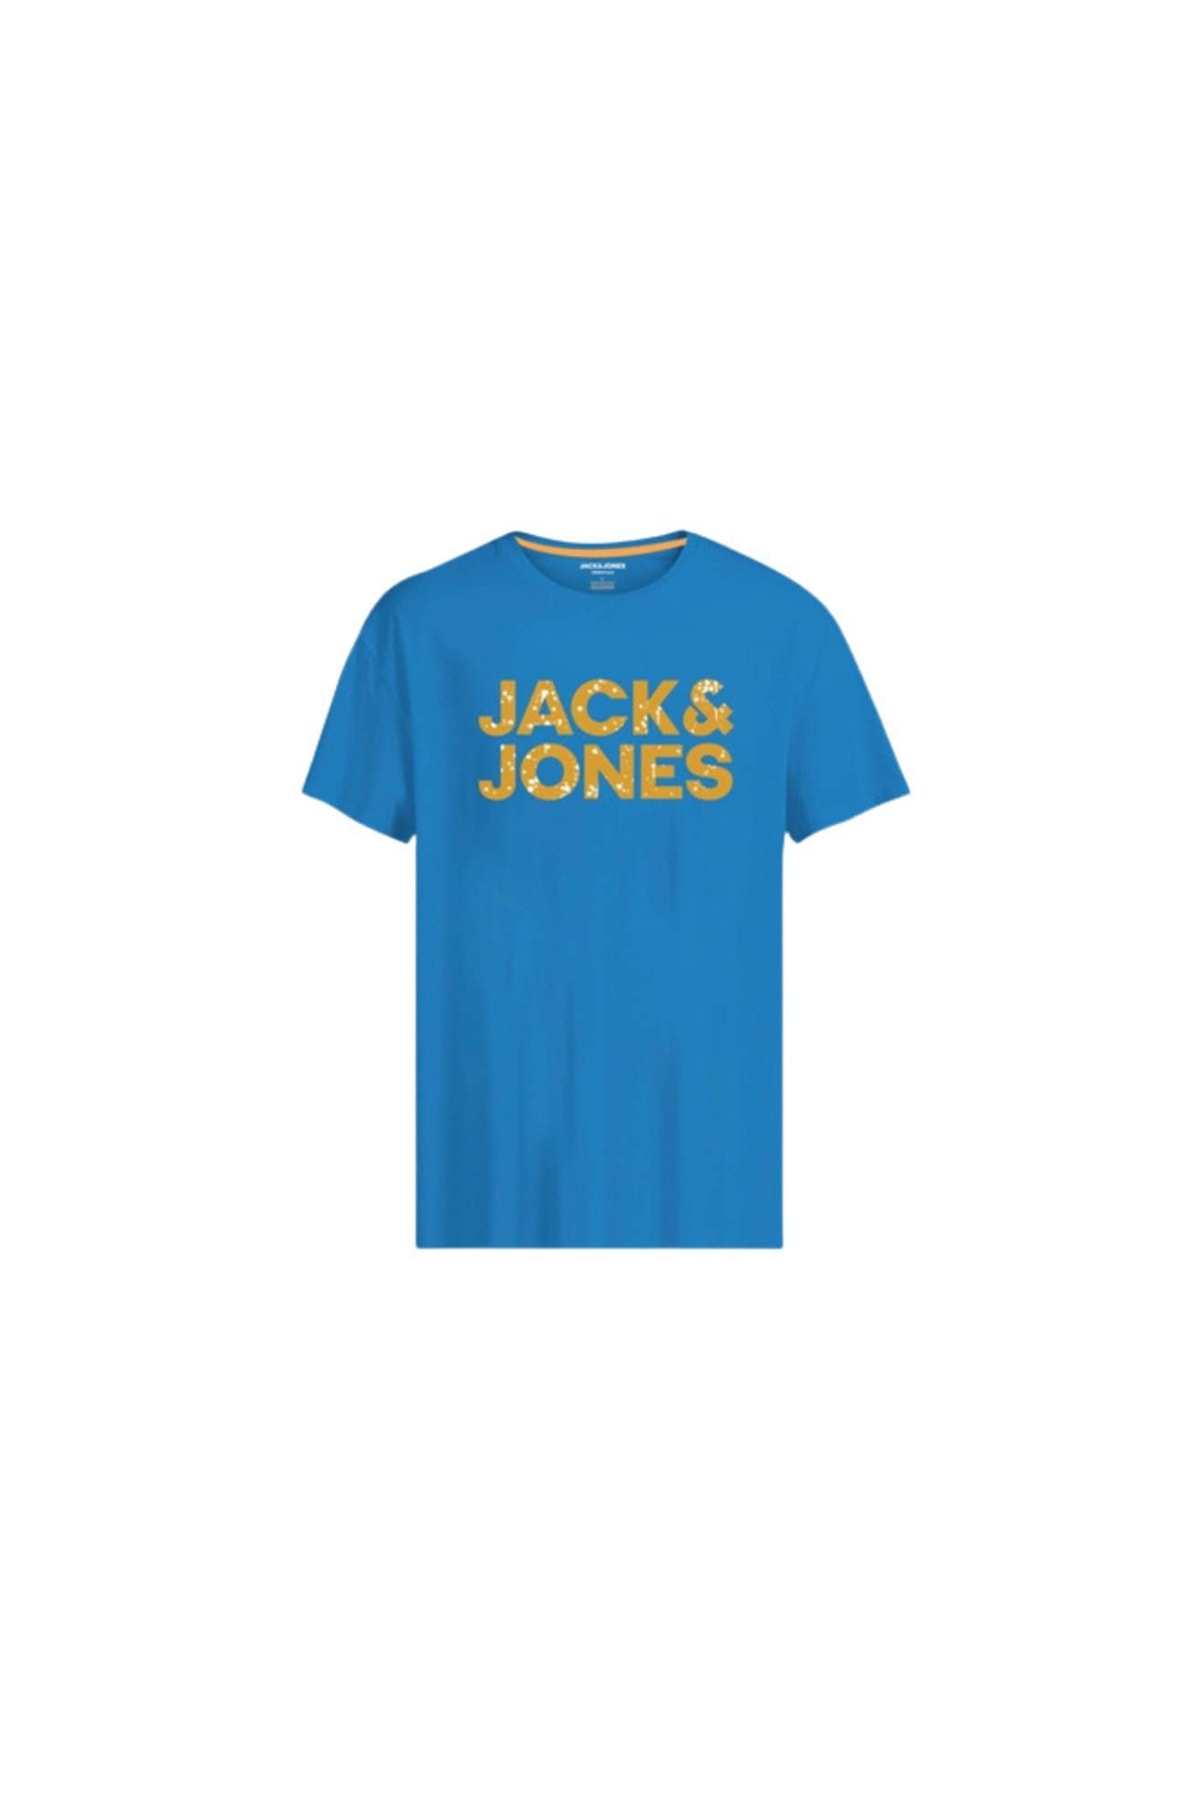 Jack & Jones Hemd Blau Regular Fit Fast ausverkauft